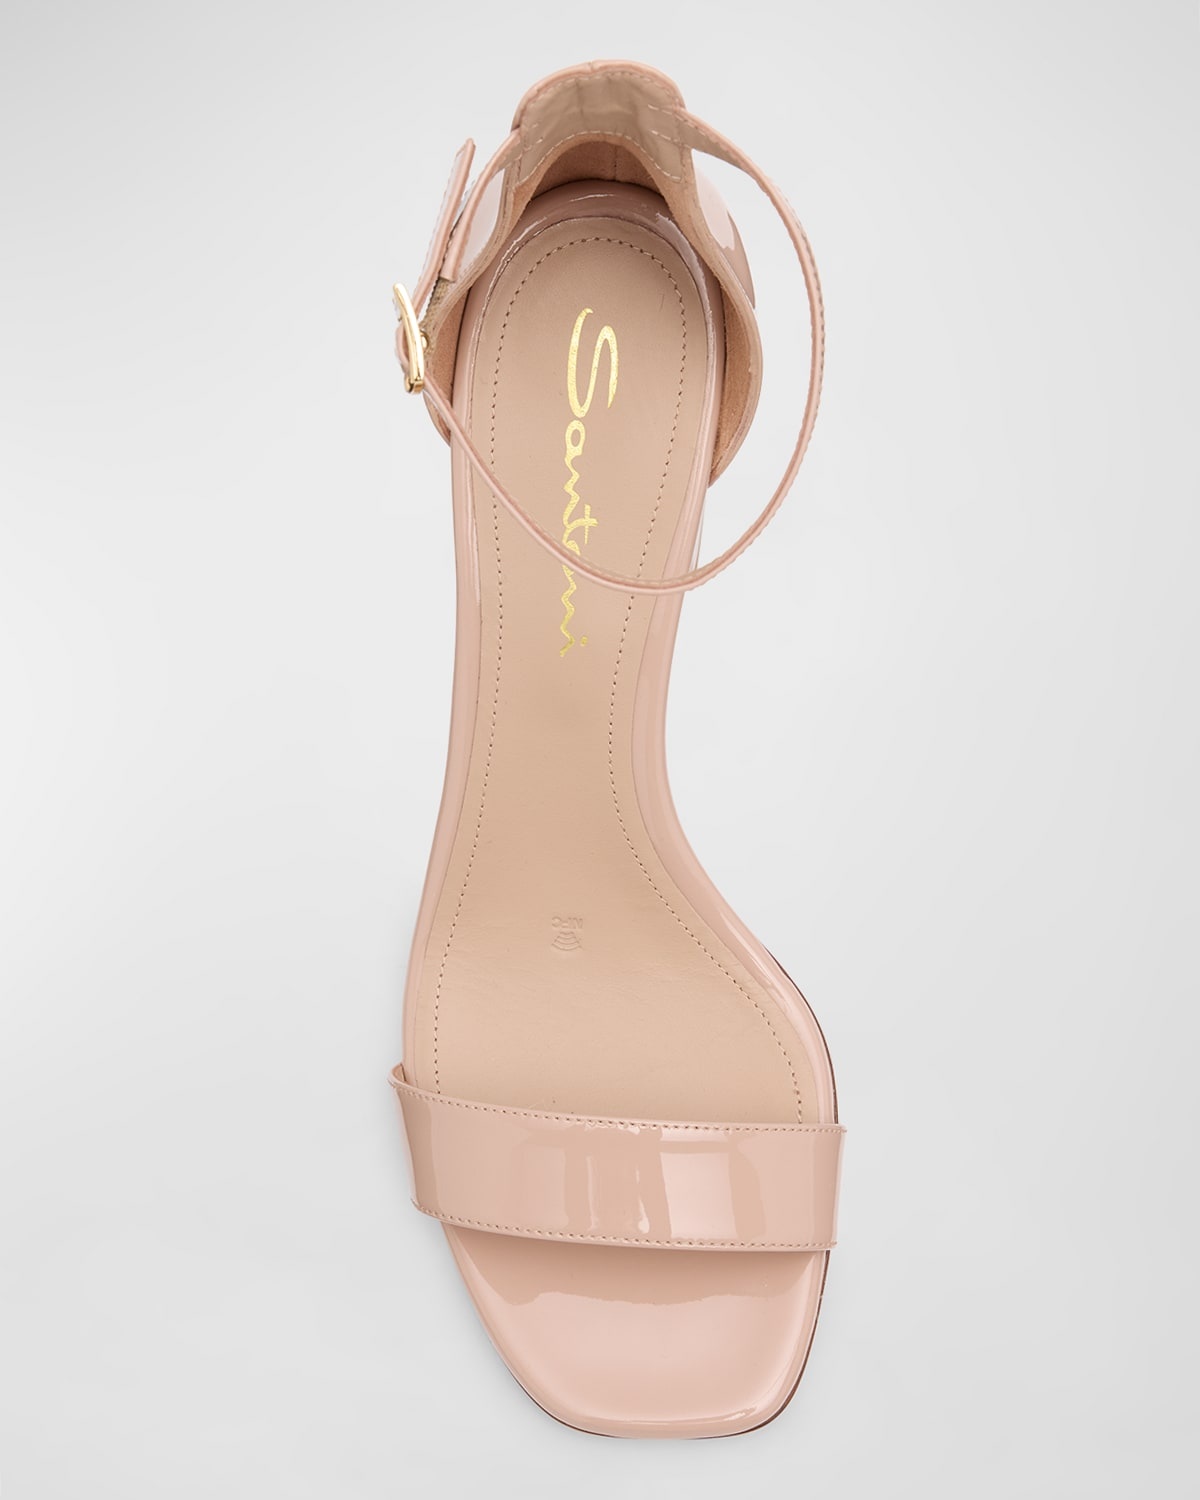 Calypso Patent Ankle-Strap Sandals - 5